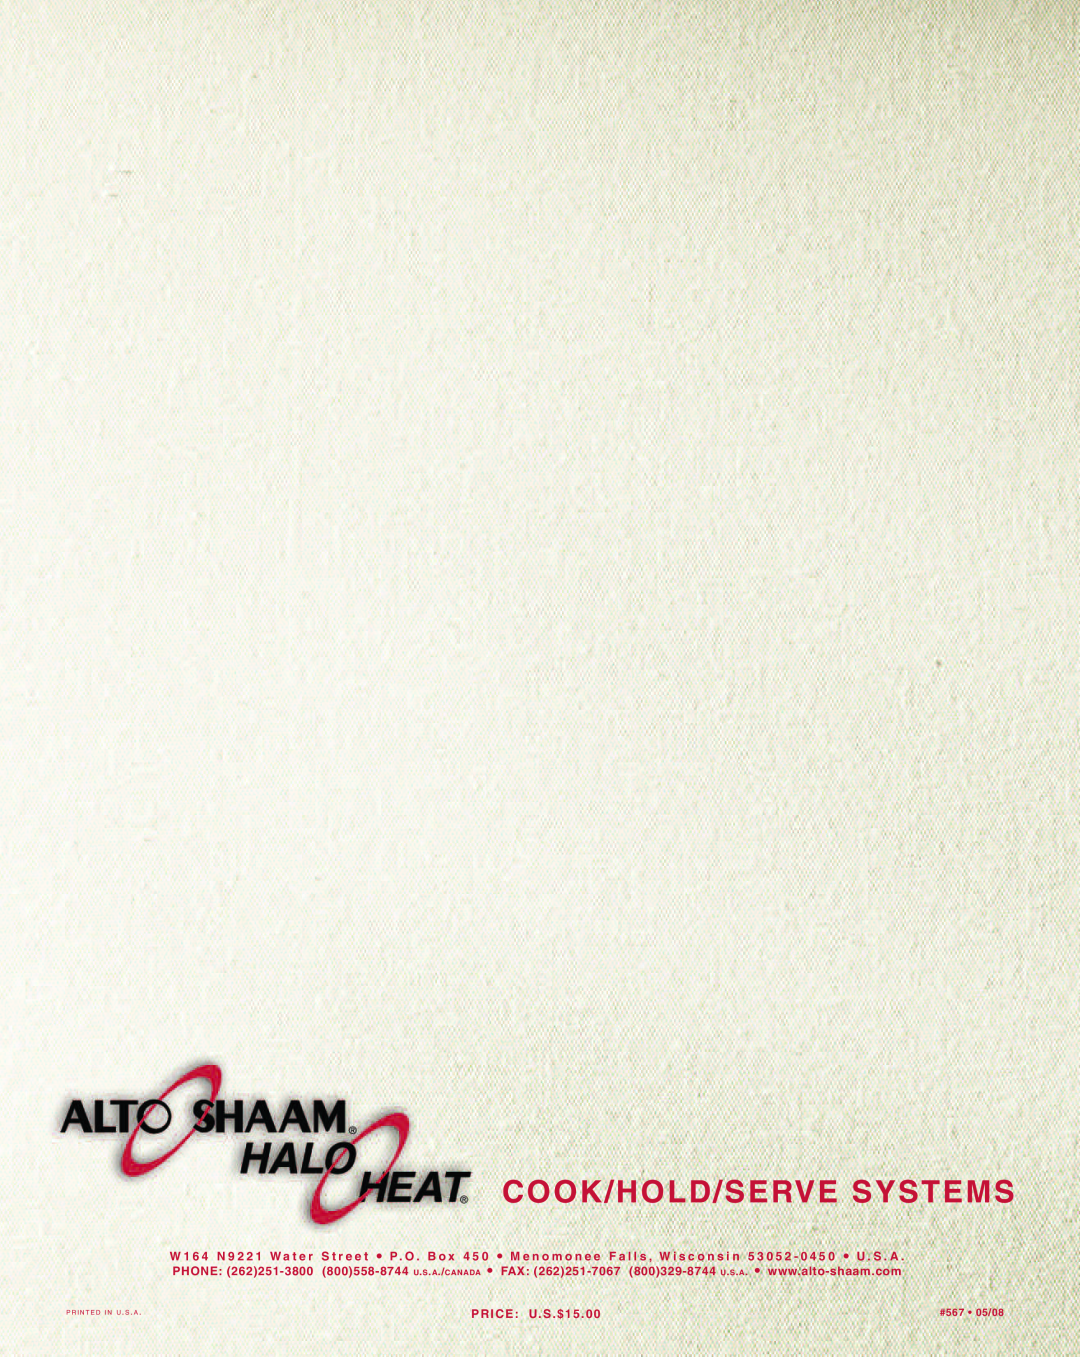 Alto-Shaam Electronically Operated Ovens manual Co Ok /Ho Ld /Se Rve Sys Te Ms, PRICE : U.S .$15, #567 • 05/08 